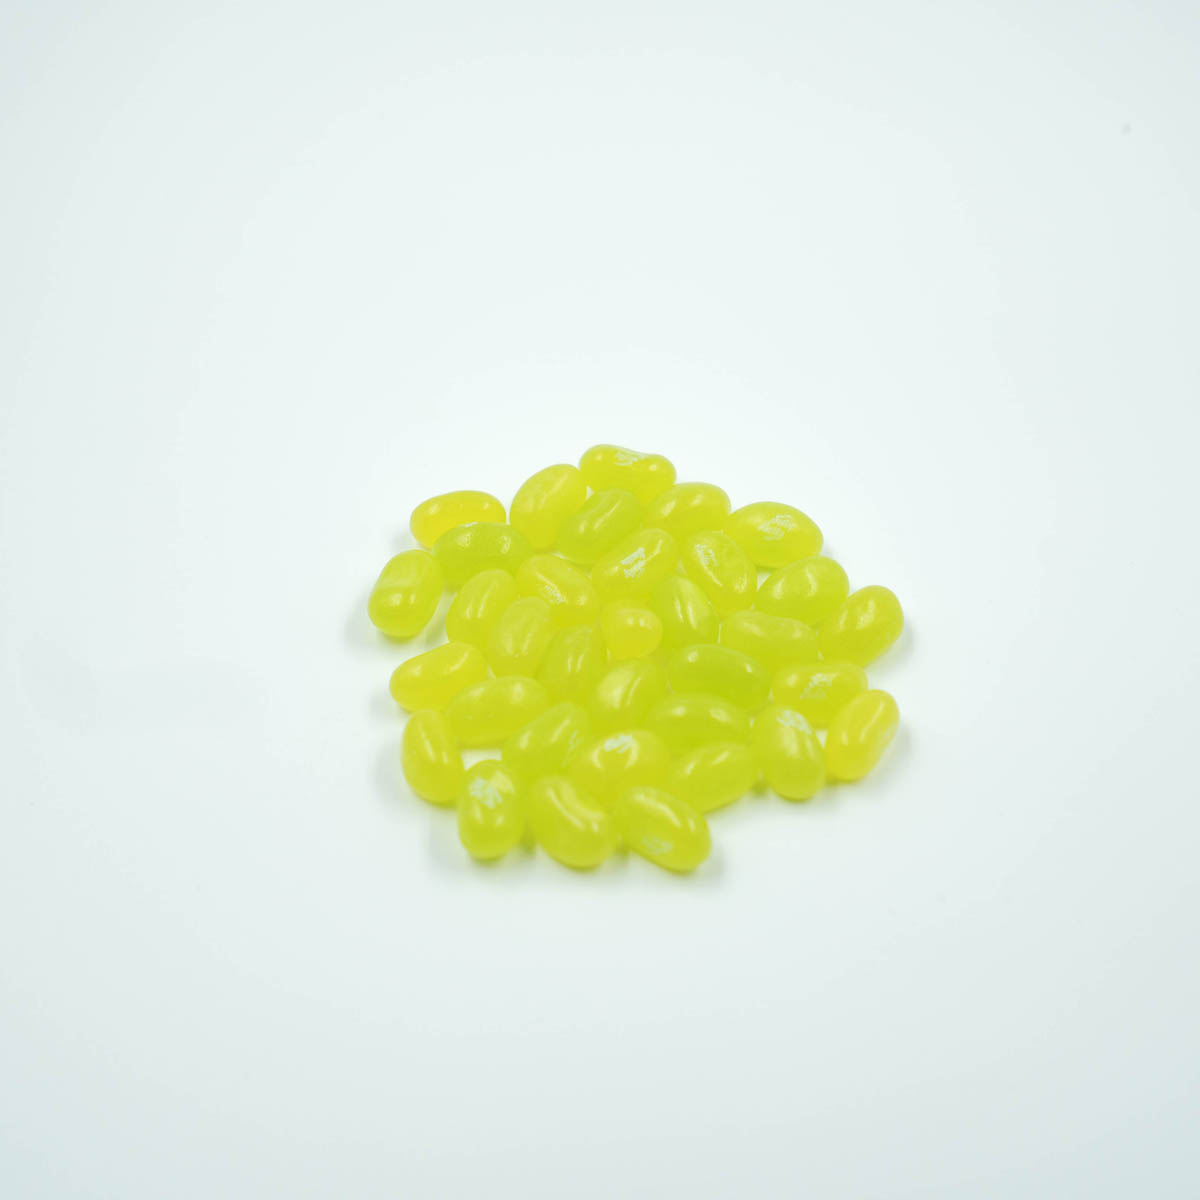 Jelly Belly Lemon Lime Candy